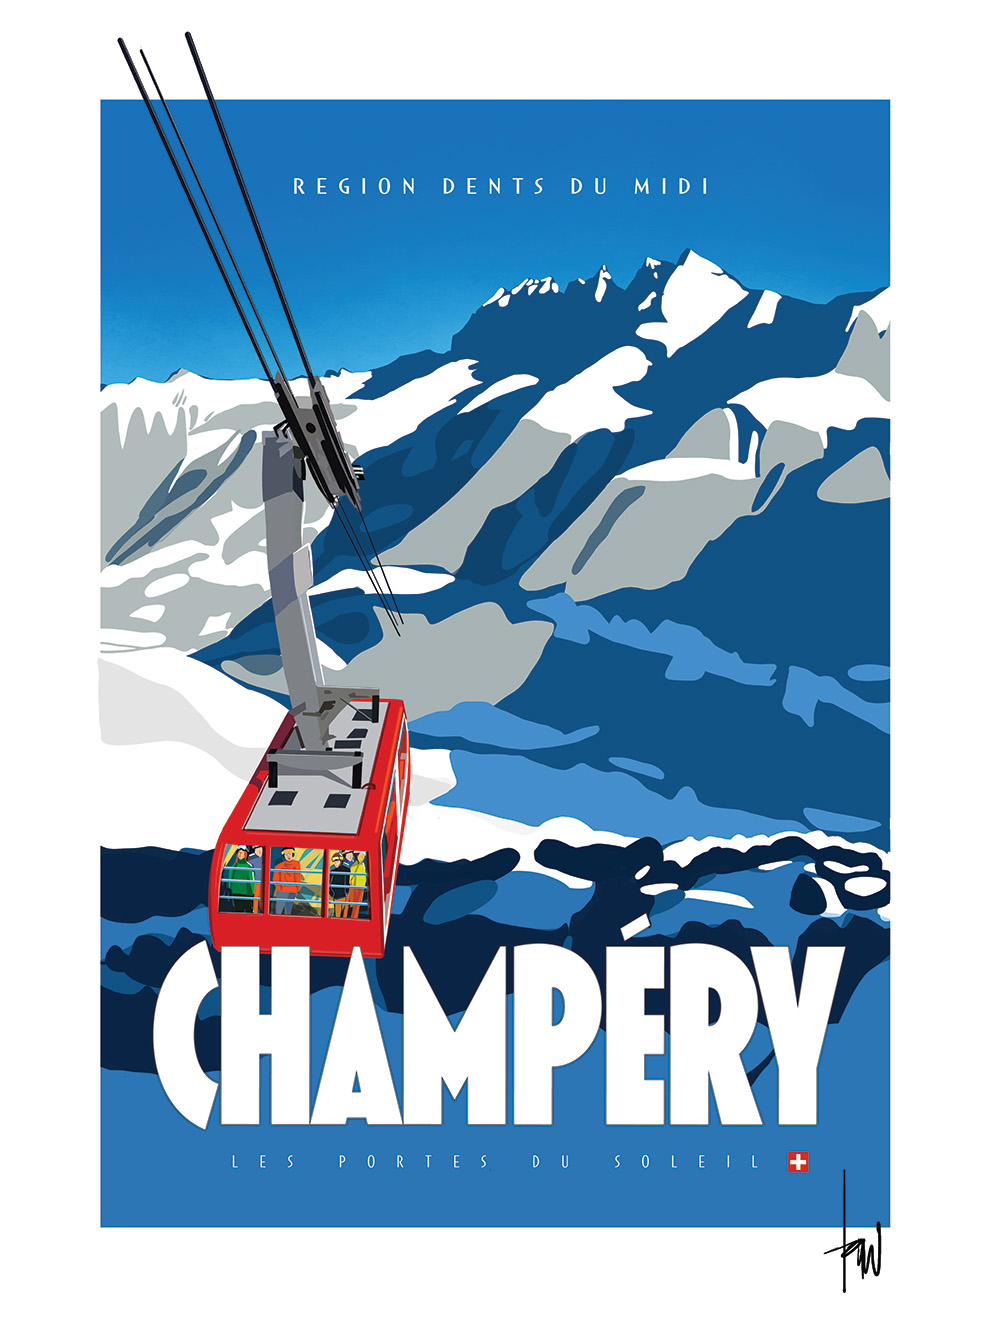 Poster Danny Touw Champery Téléphérique Telecabin Cablecar Ski Poster Region Dents du Midi Switzerland Portes du Soleil